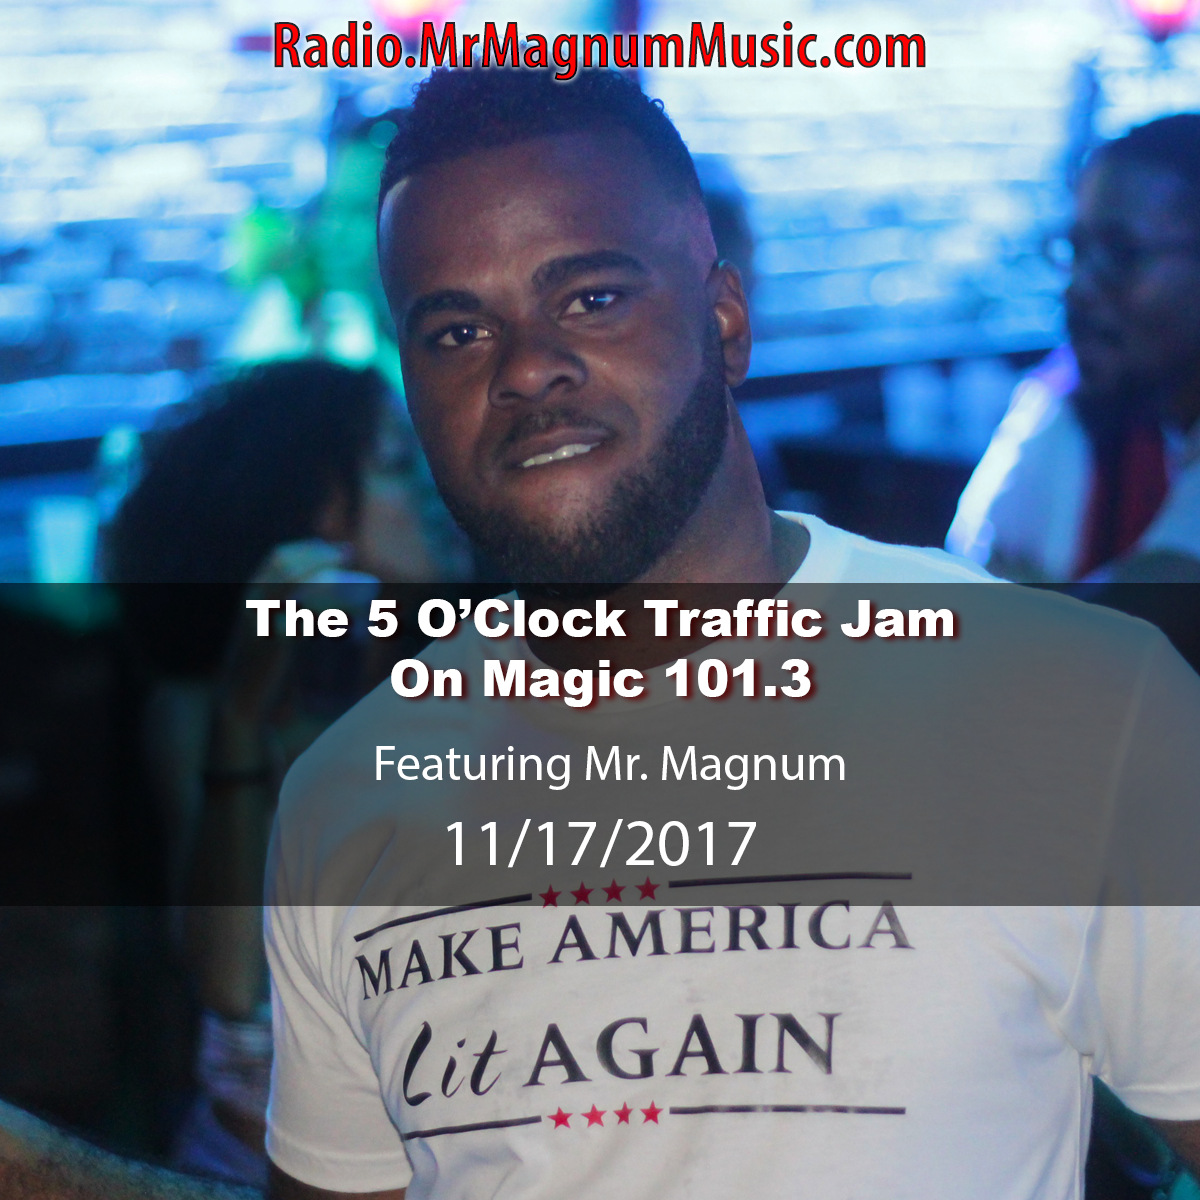 The 5 O'Clock Traffic Jam 20171117 featuring Gainesville's #1 DJ, Mr. Magnum on Magic 101.3